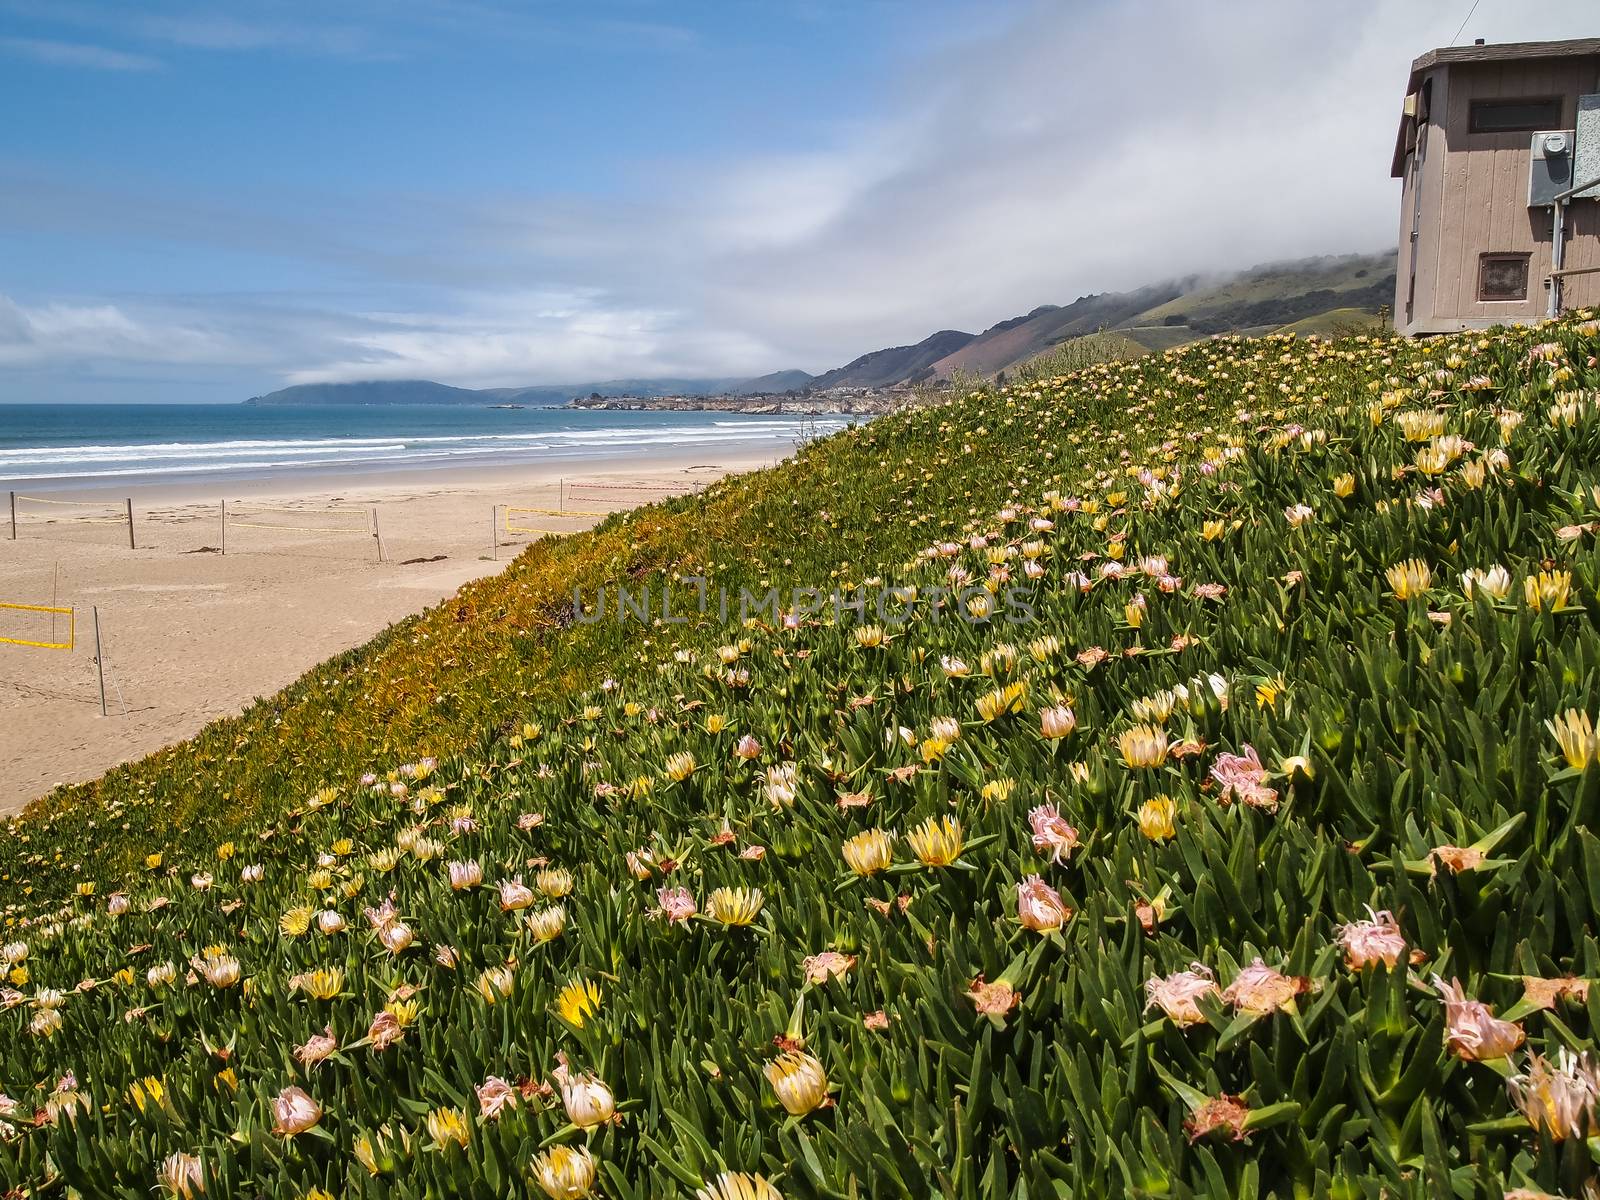 Wild flowers on the beach in California